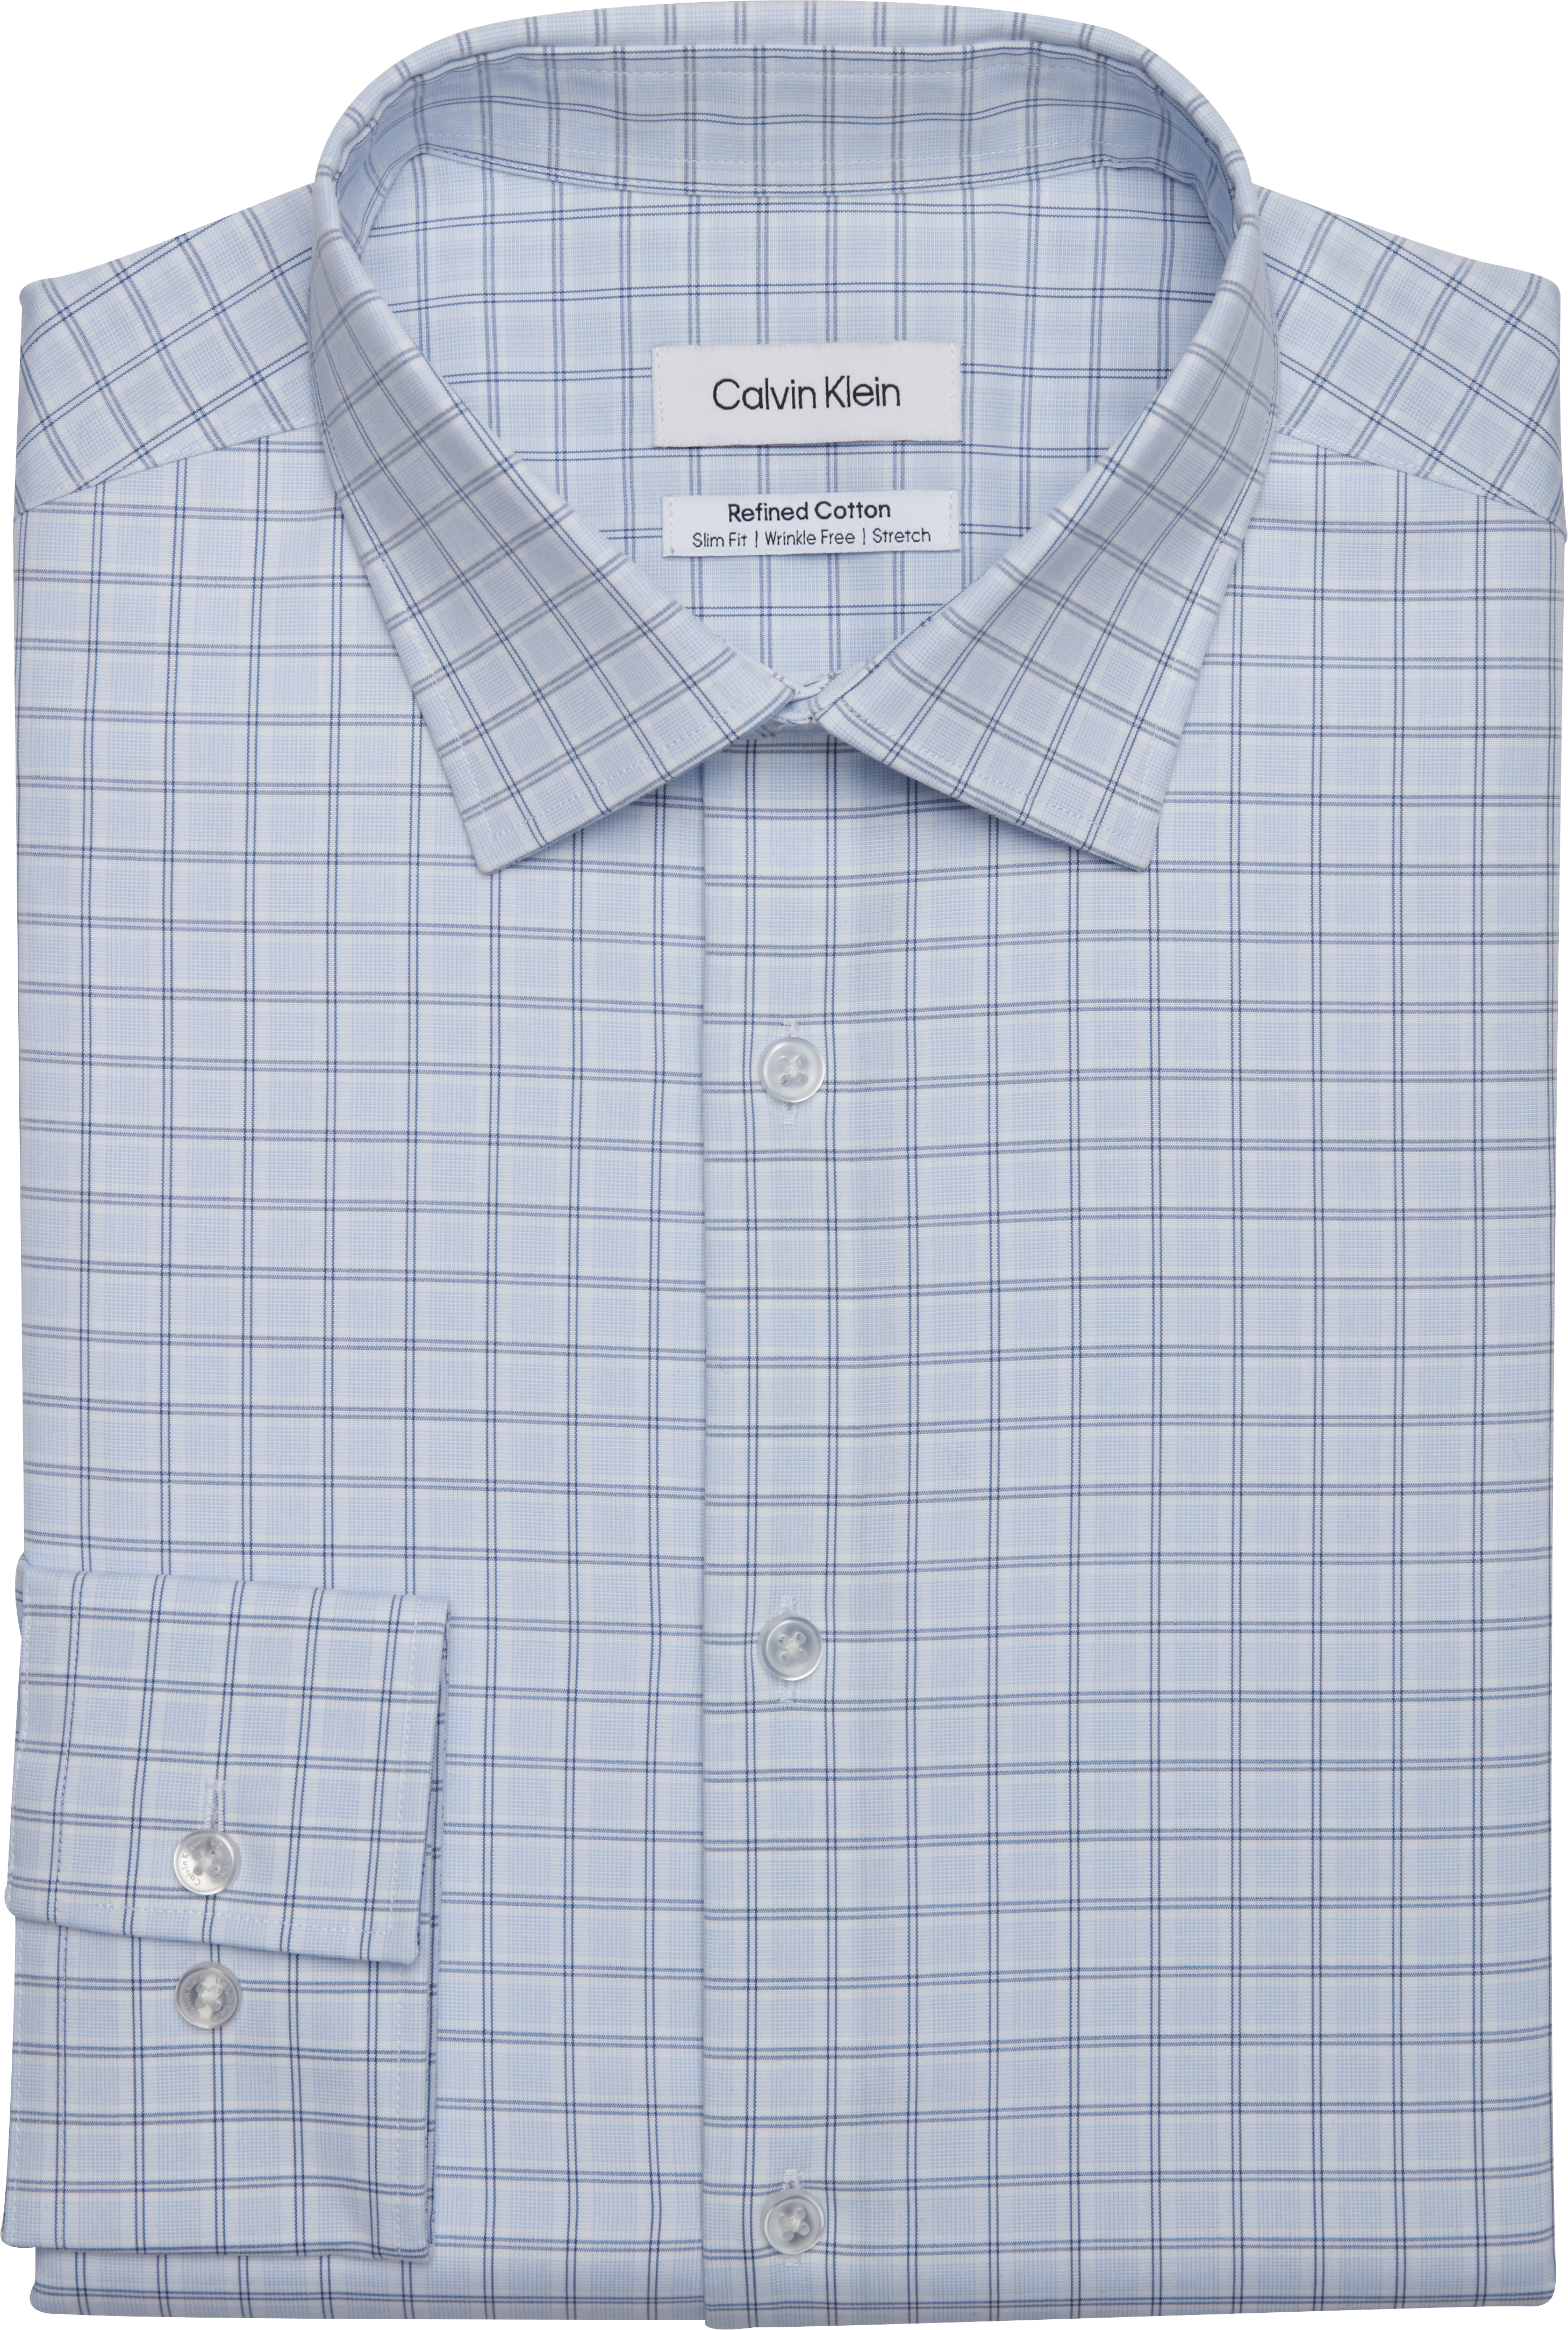 Refined Cotton Slim Fit Grid Spread Collar Dress Shirt